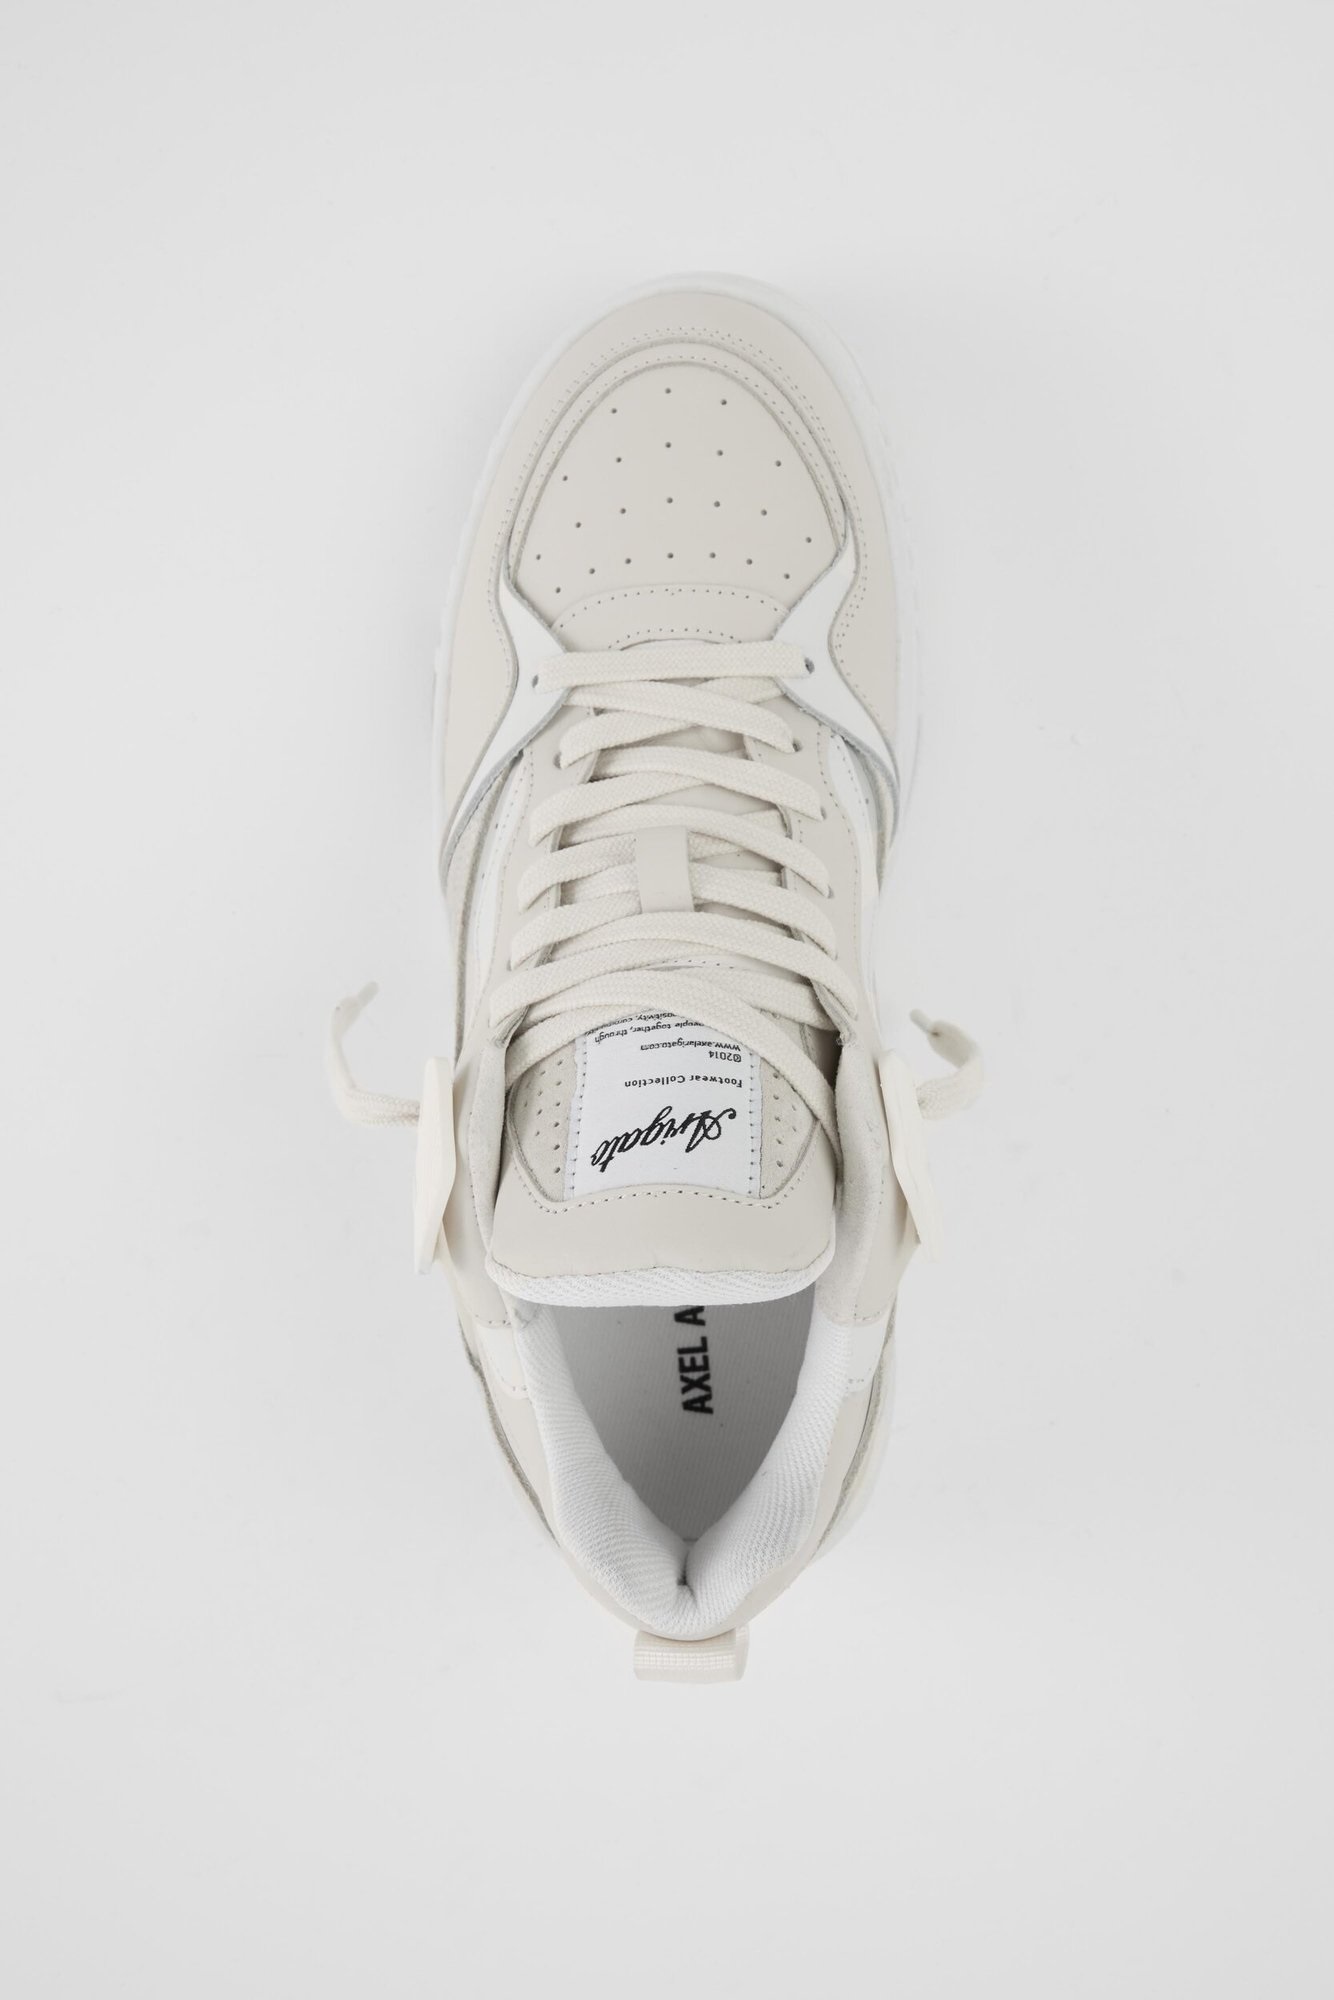 AXEL ARIGATO Astro Sneaker in Beige/White  44